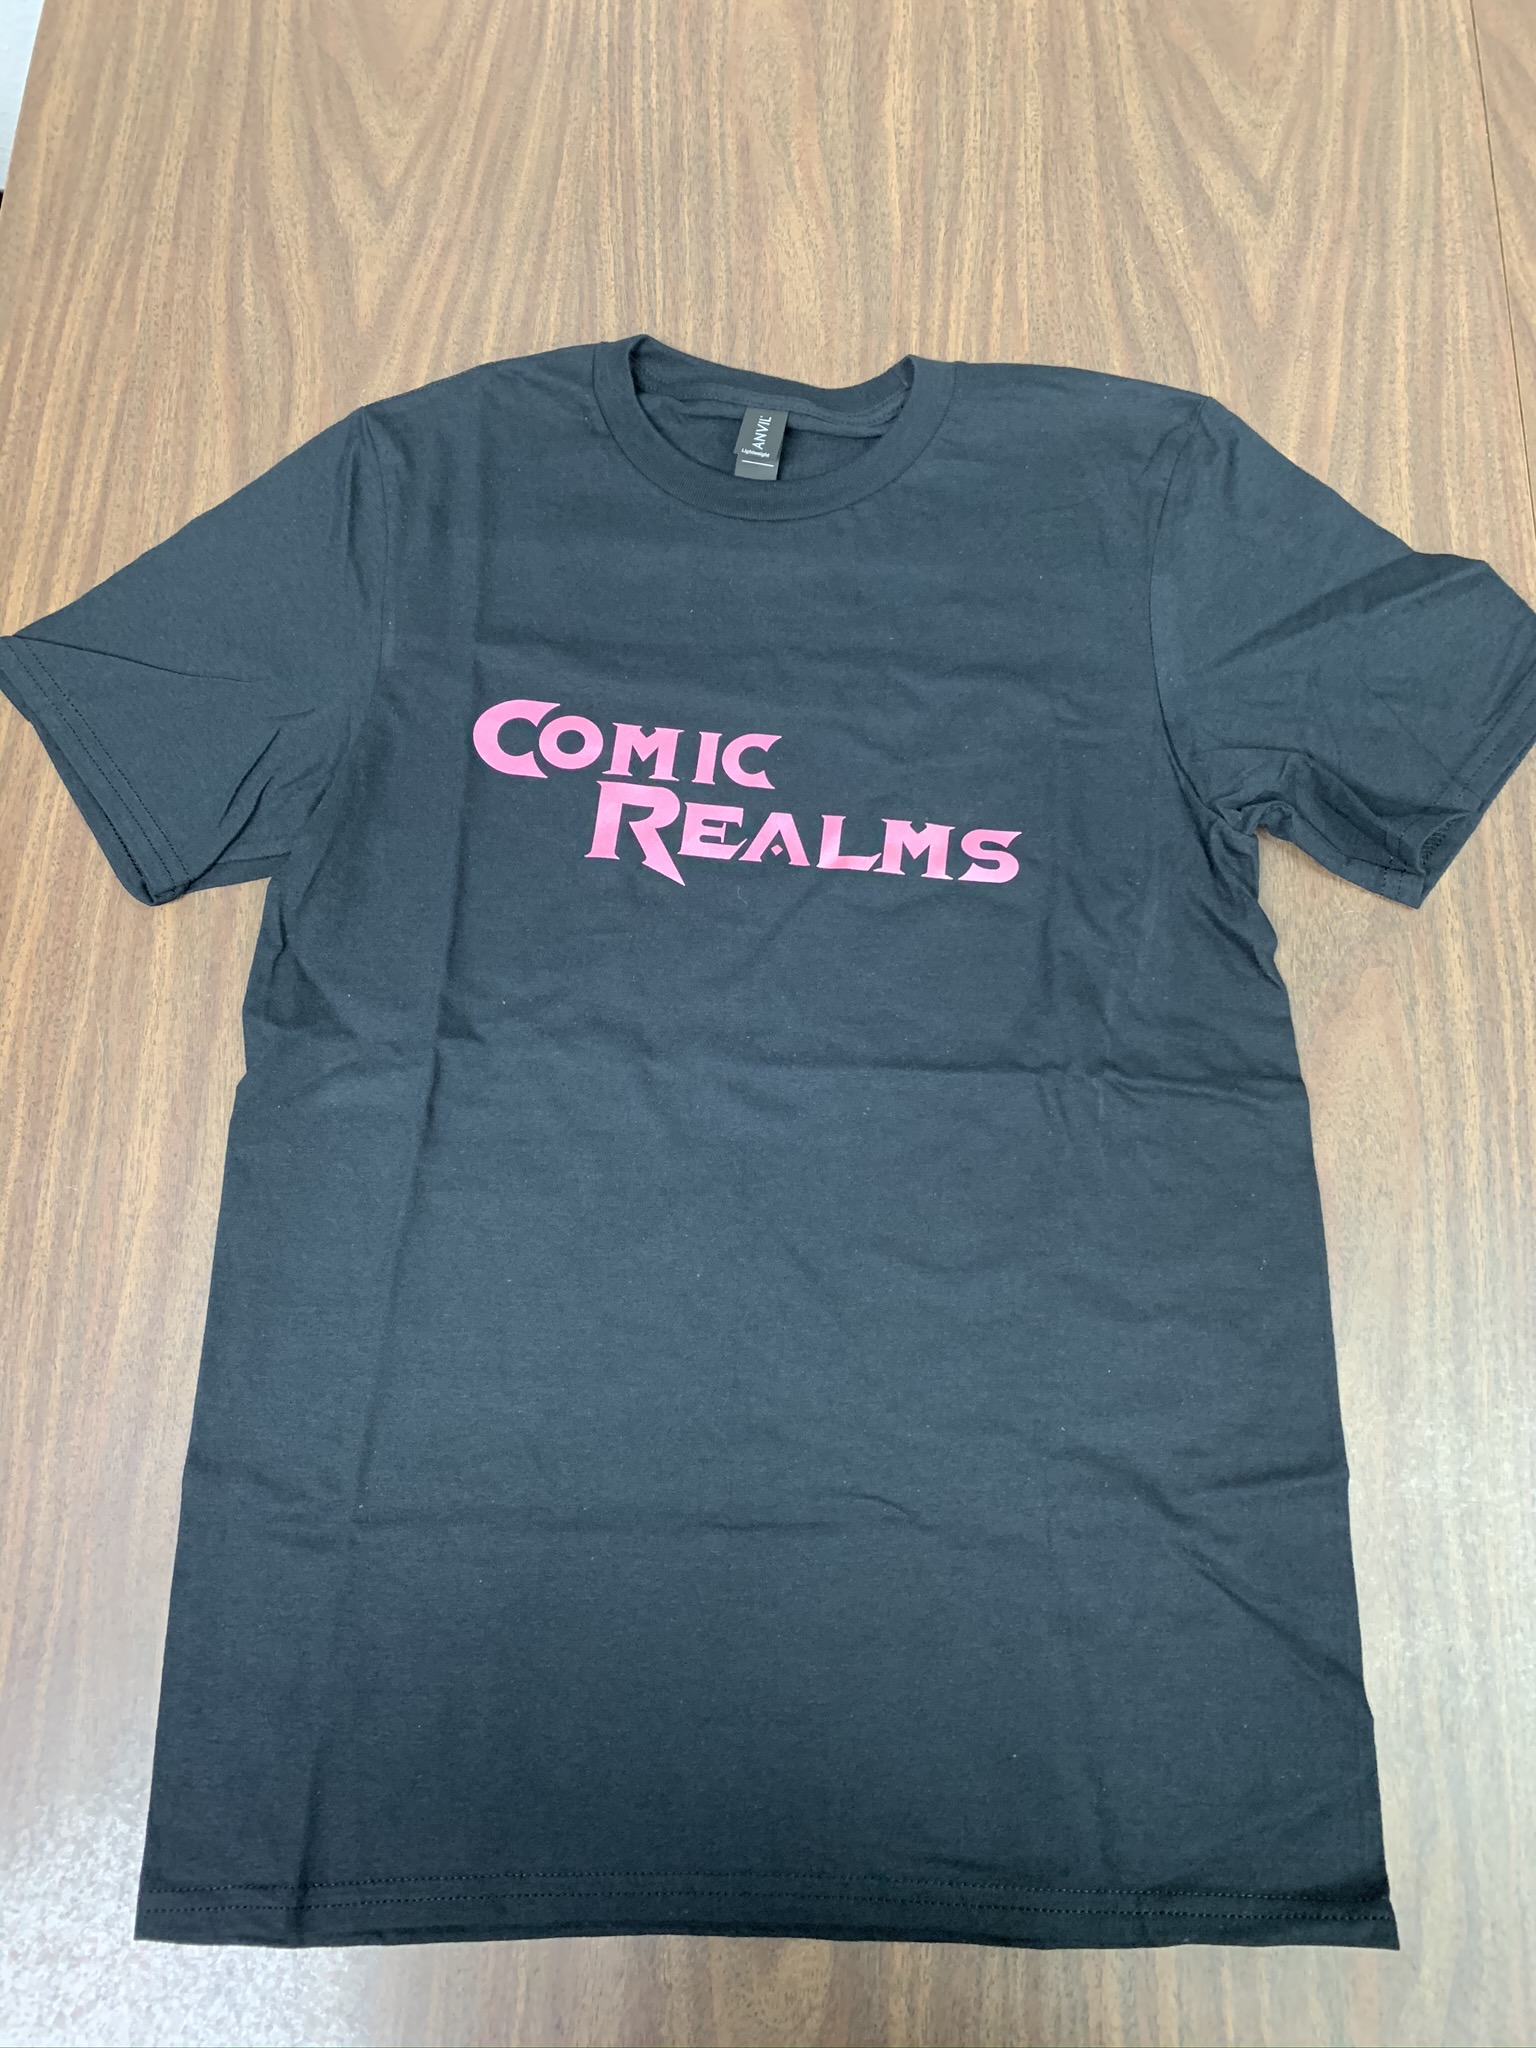 Comic Realms T-Shirt Medium Black/Pearl Pink